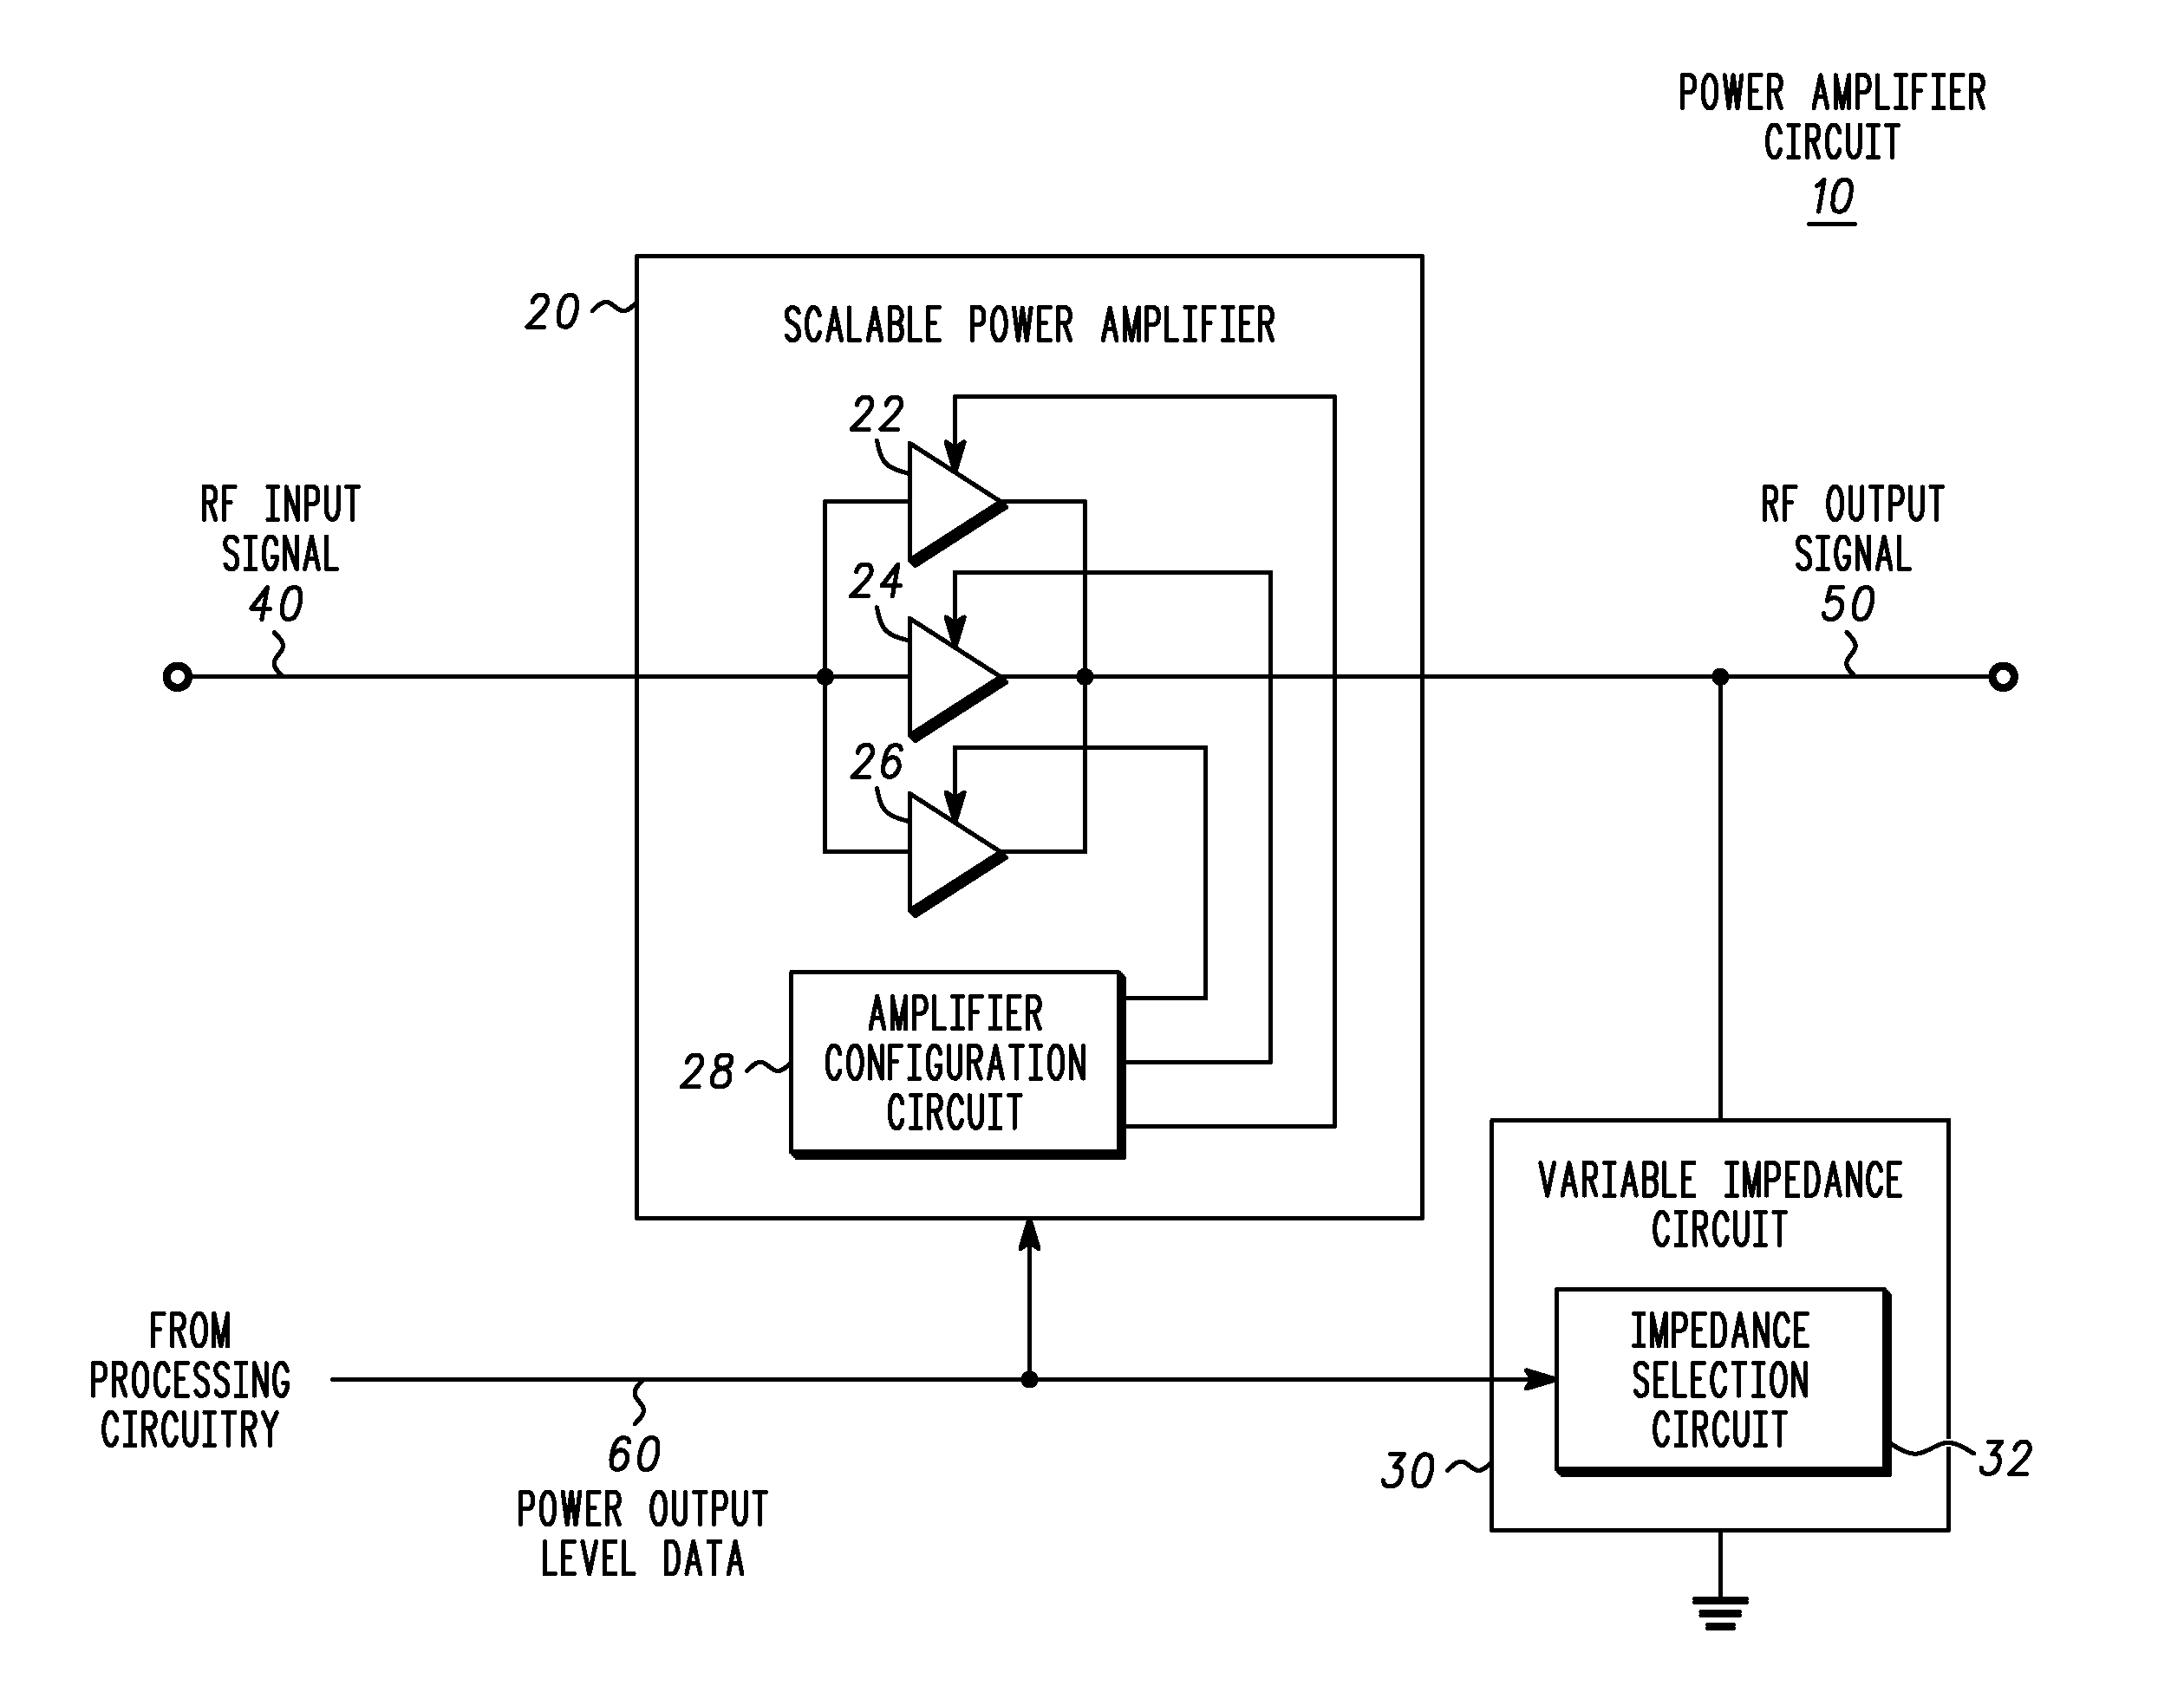 Low power consumption adaptive power amplifier